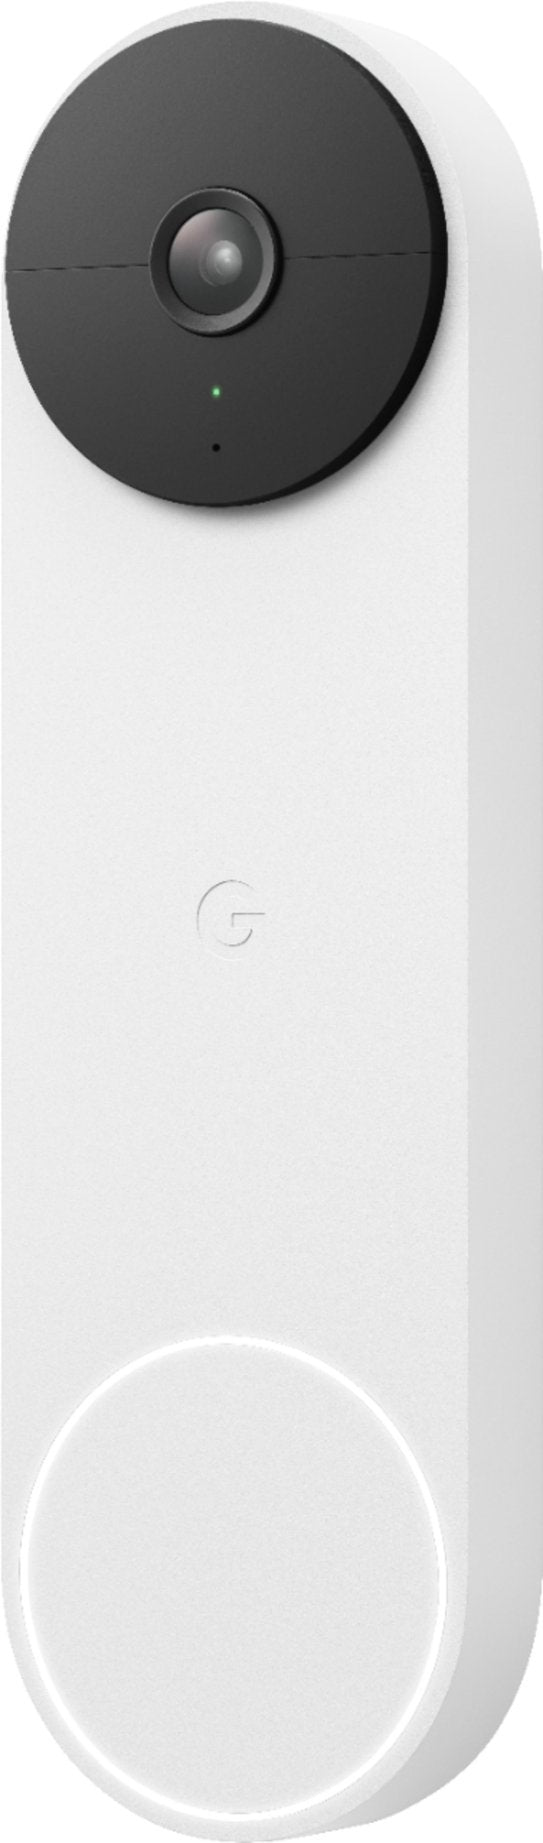 Google - GA01318-US Nest Doorbell Battery - Snow